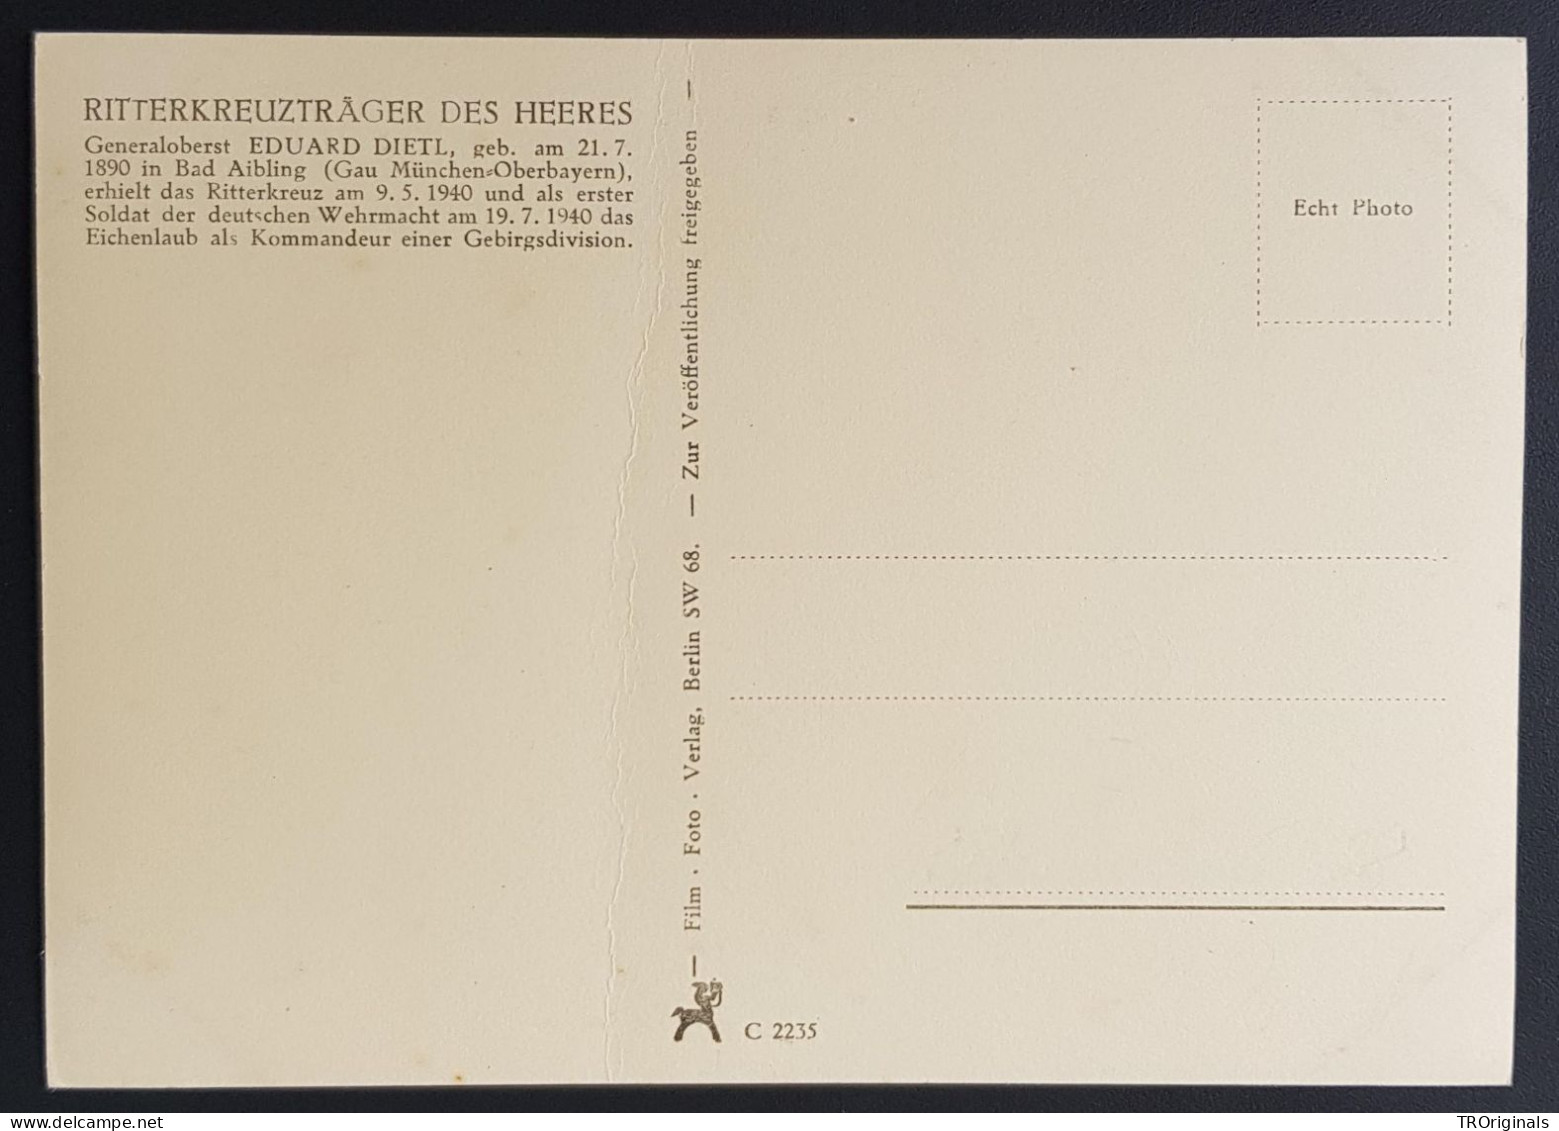 GERMANY THIRD 3rd REICH ORIGINAL WWII CARD IRON CROSS WINNERS - WEHRMACHT GENERAL DIETI - Weltkrieg 1939-45